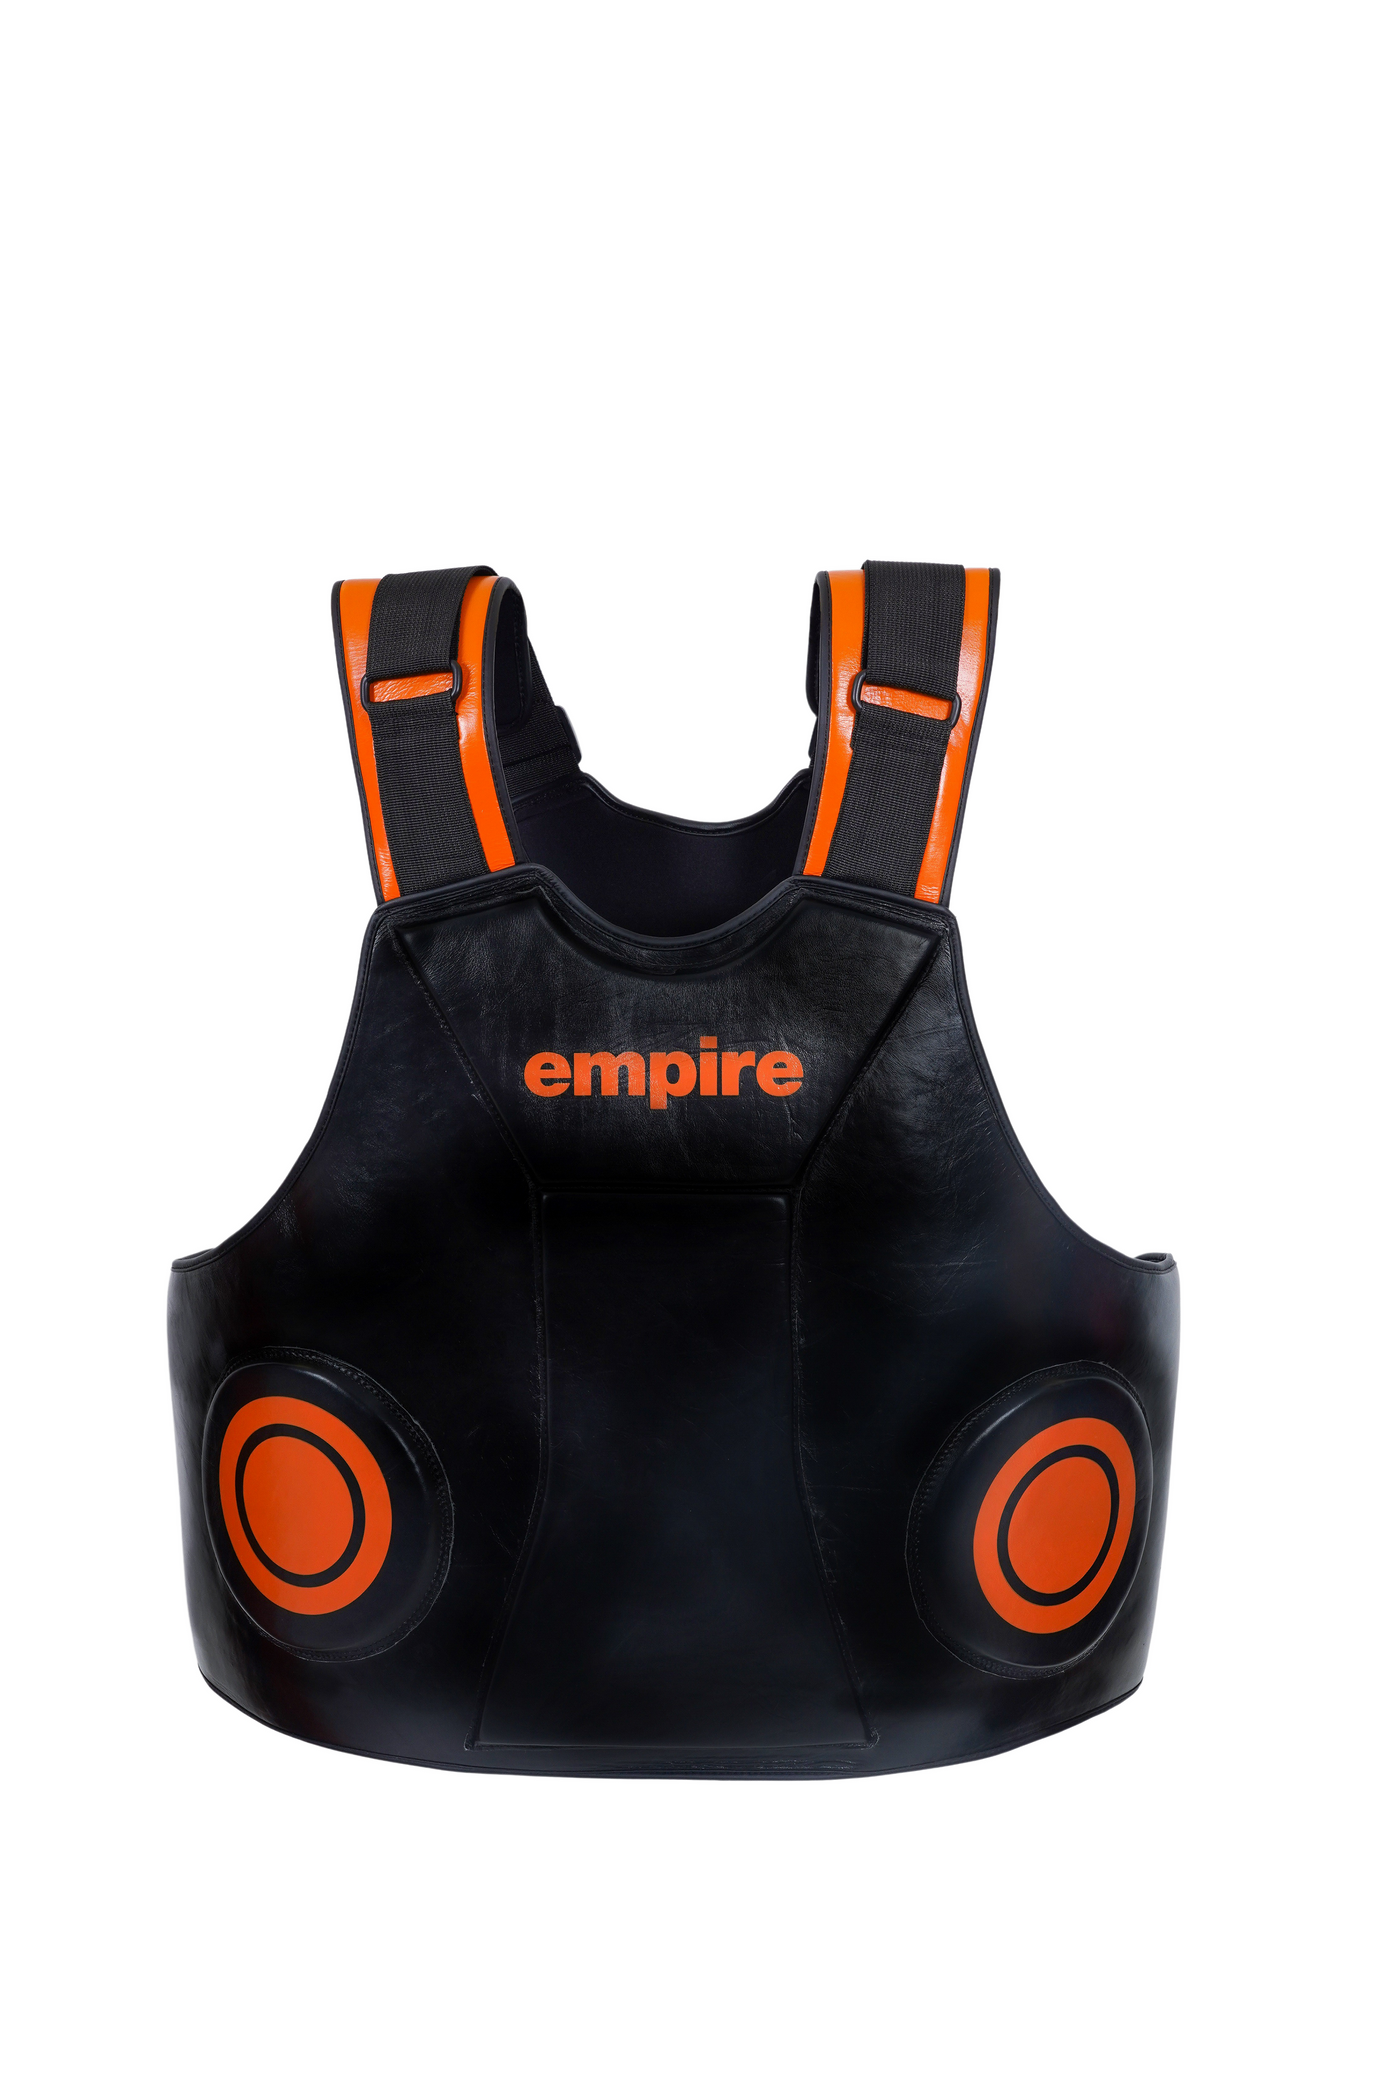 Empire Body Protector